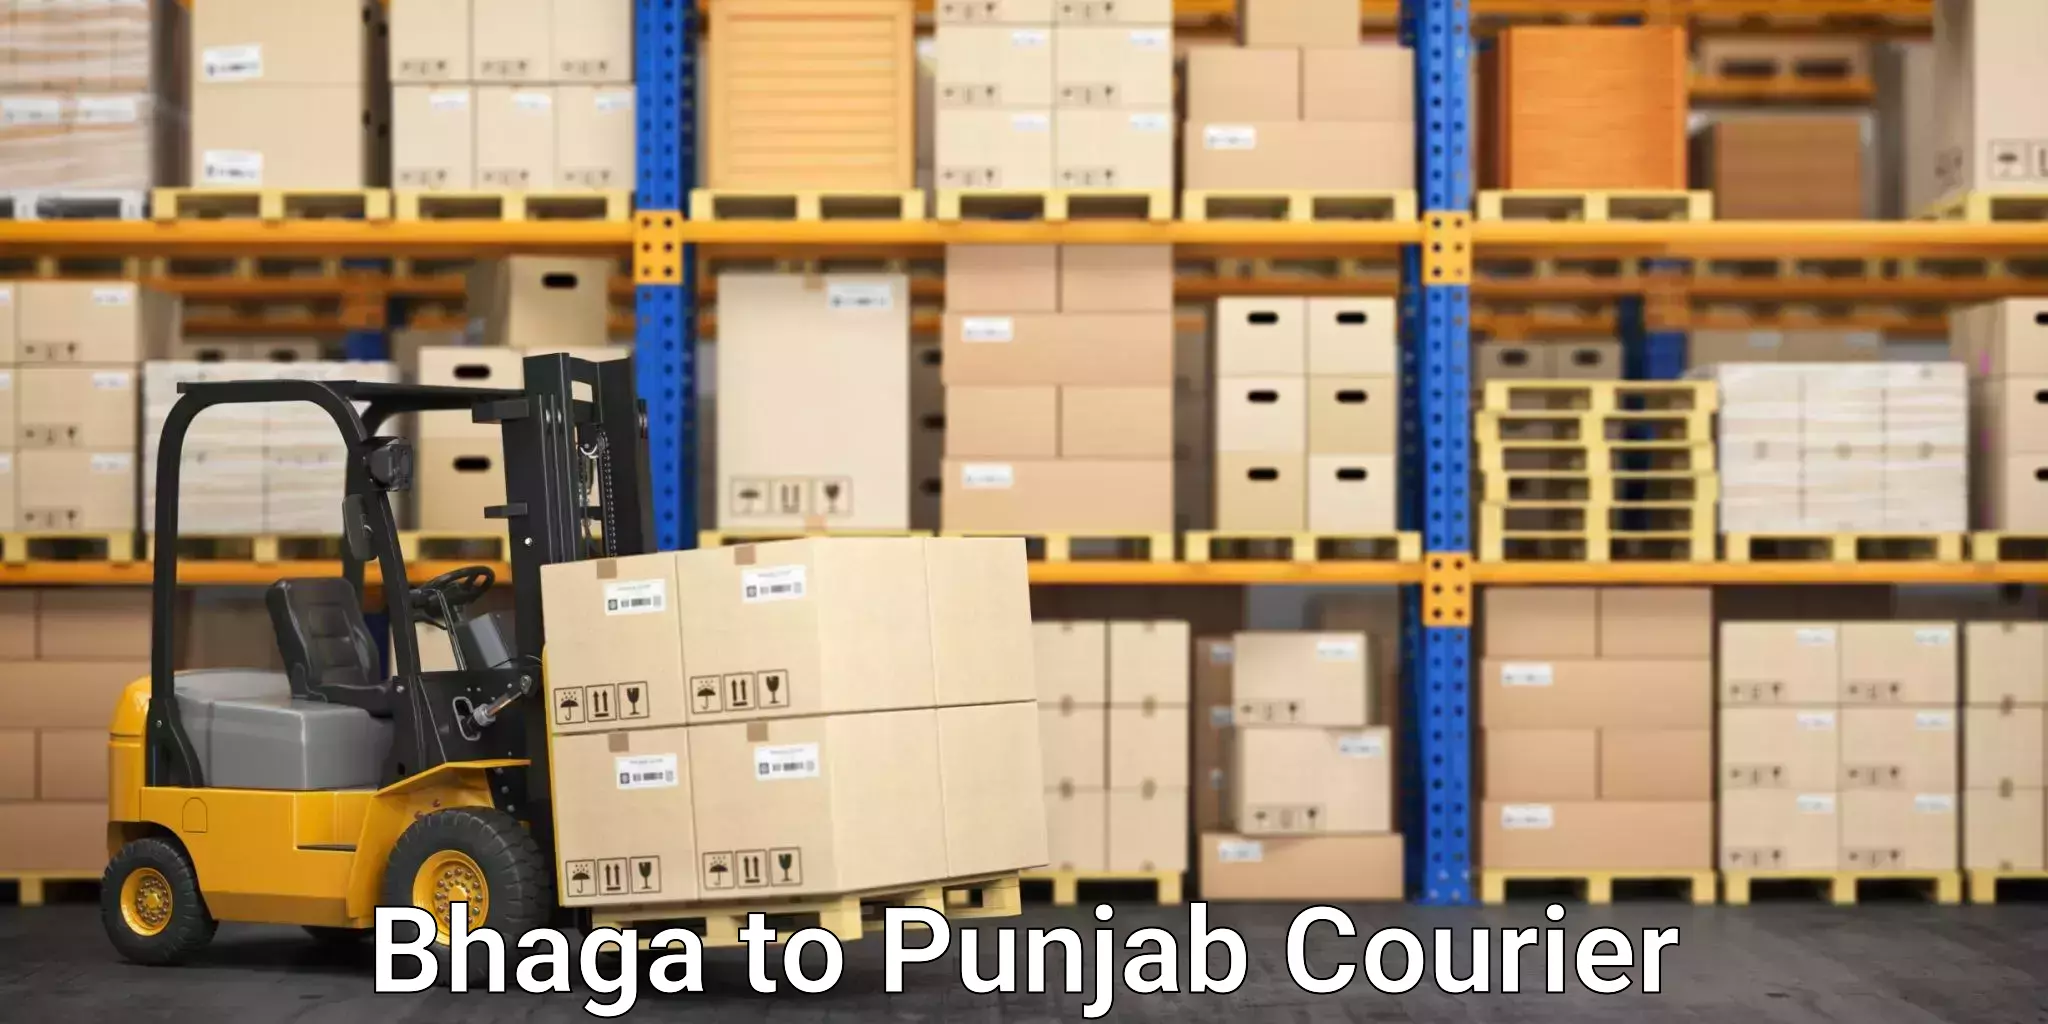 Advanced shipping technology Bhaga to Fatehgarh Sahib